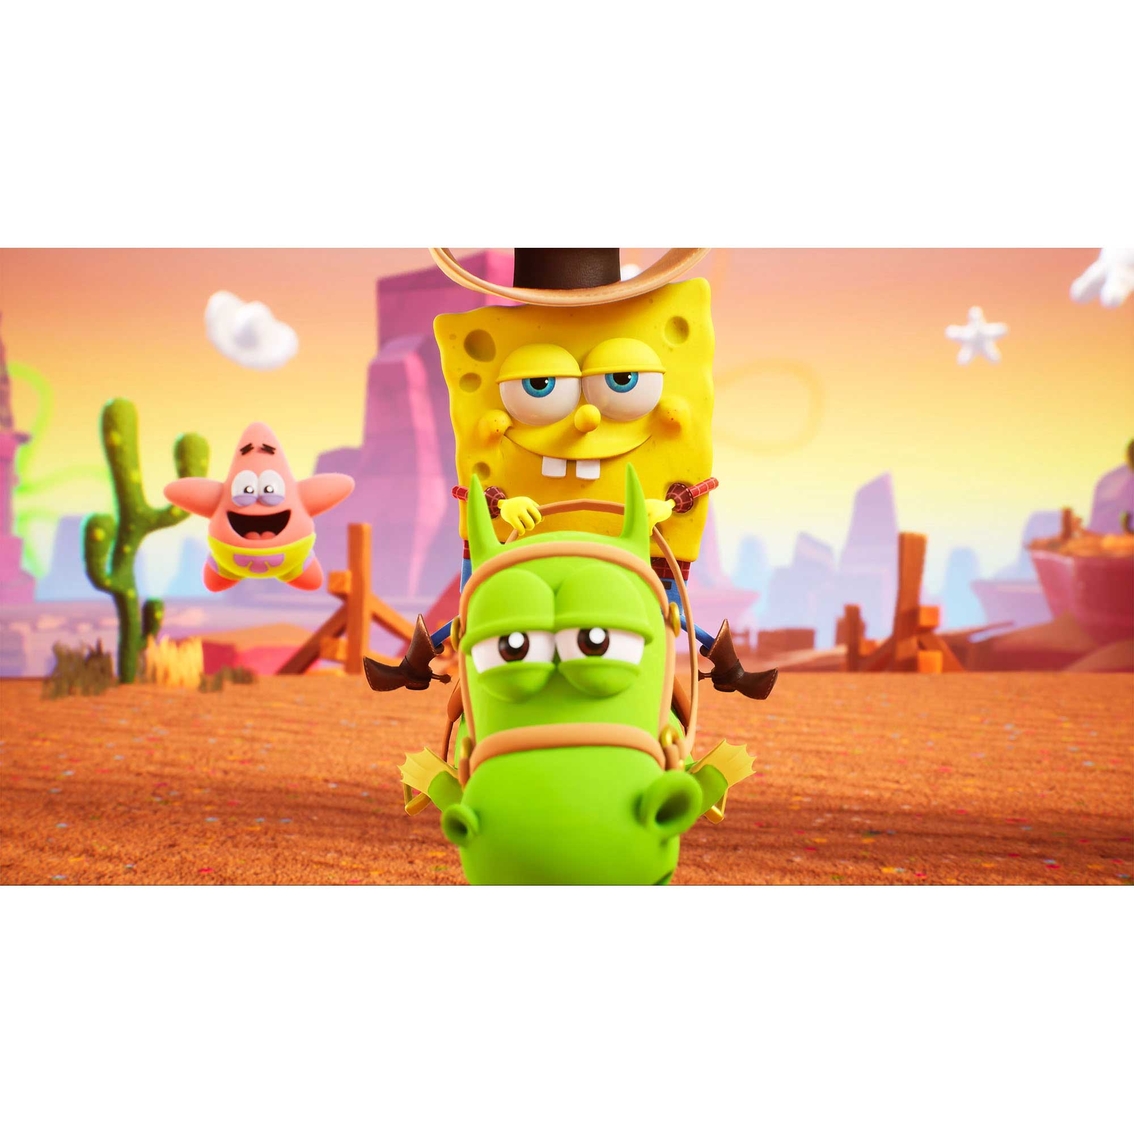 SpongeBob SquarePants: The Cosmic Shake (Xbox One) - Image 4 of 10